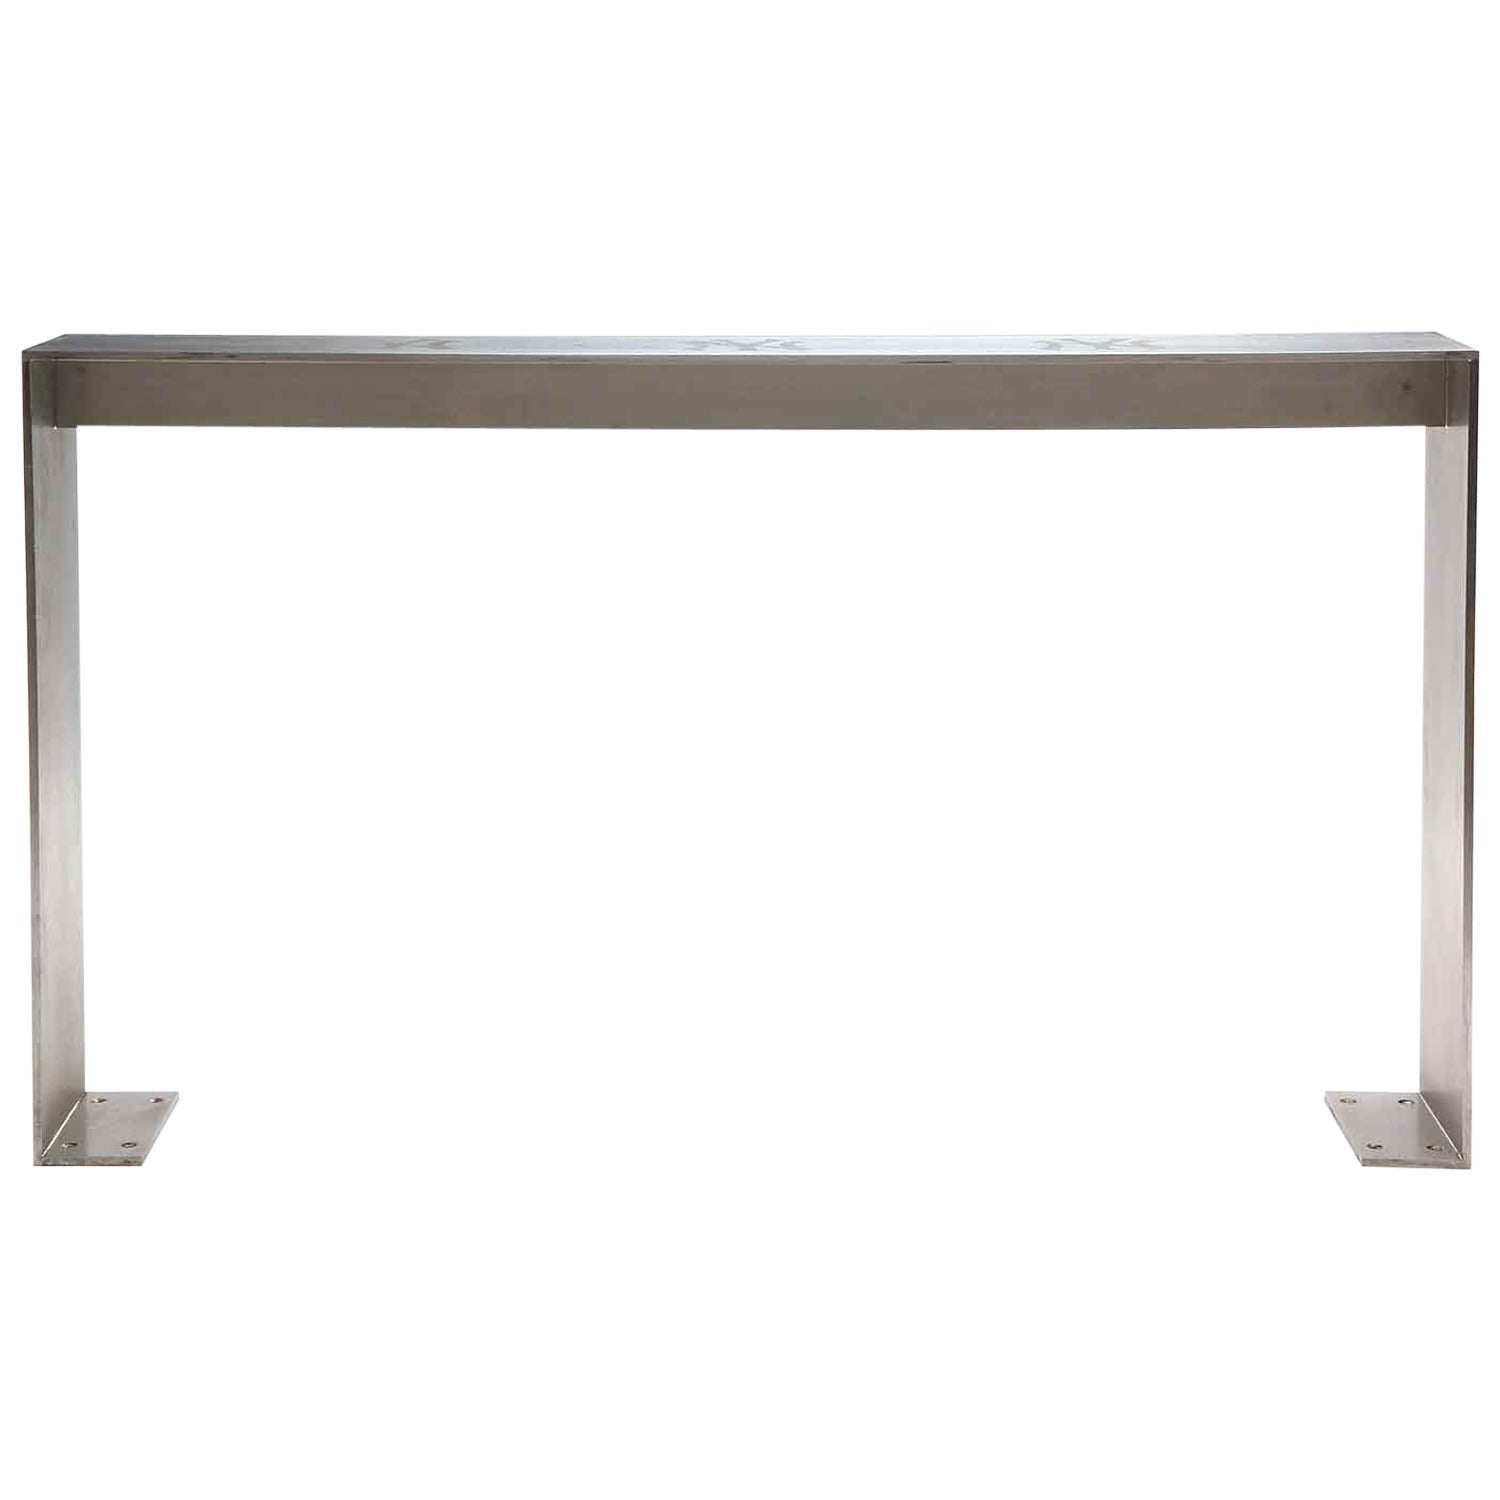 1980s Minimalist Steel Table from Yankee Stadium